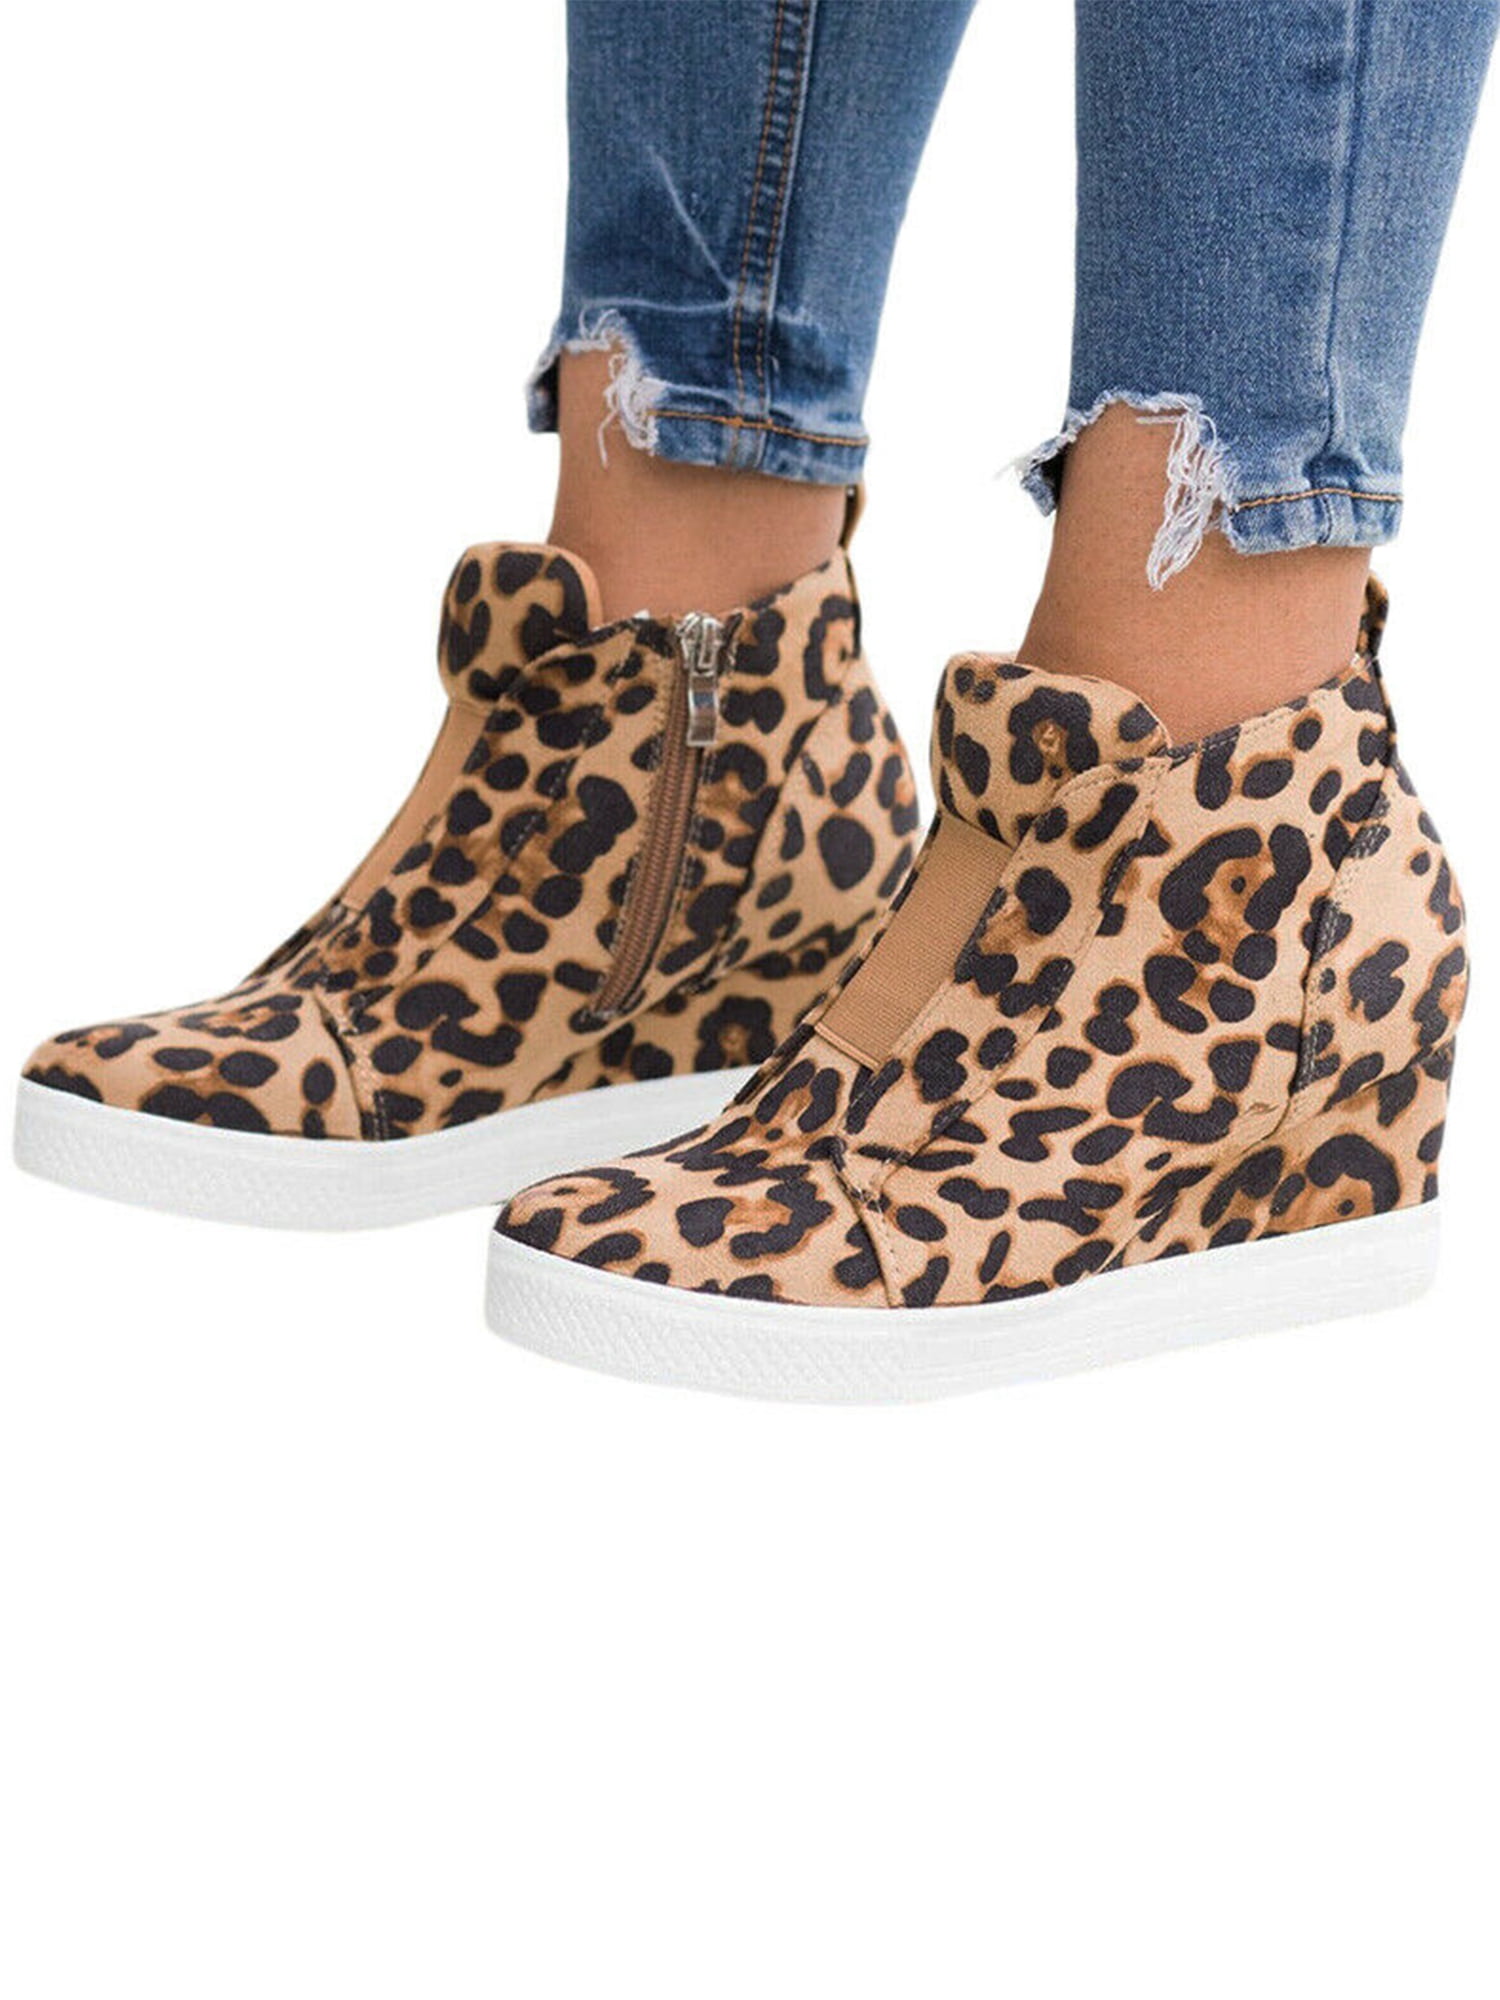 leopard boots walmart